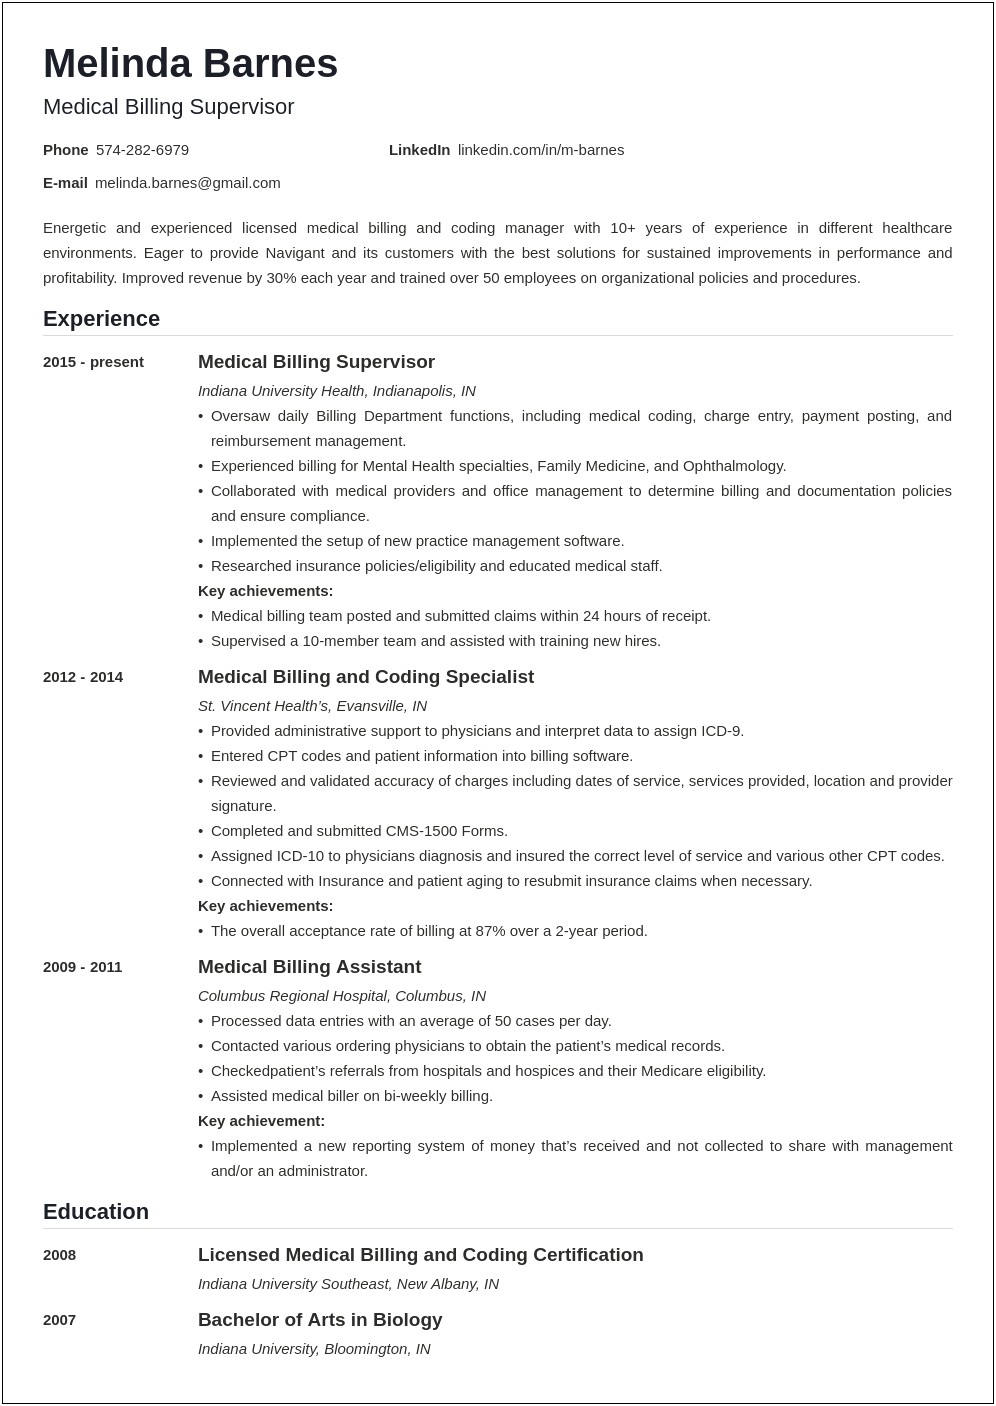 Medical Billing Specialist Job Description Resume